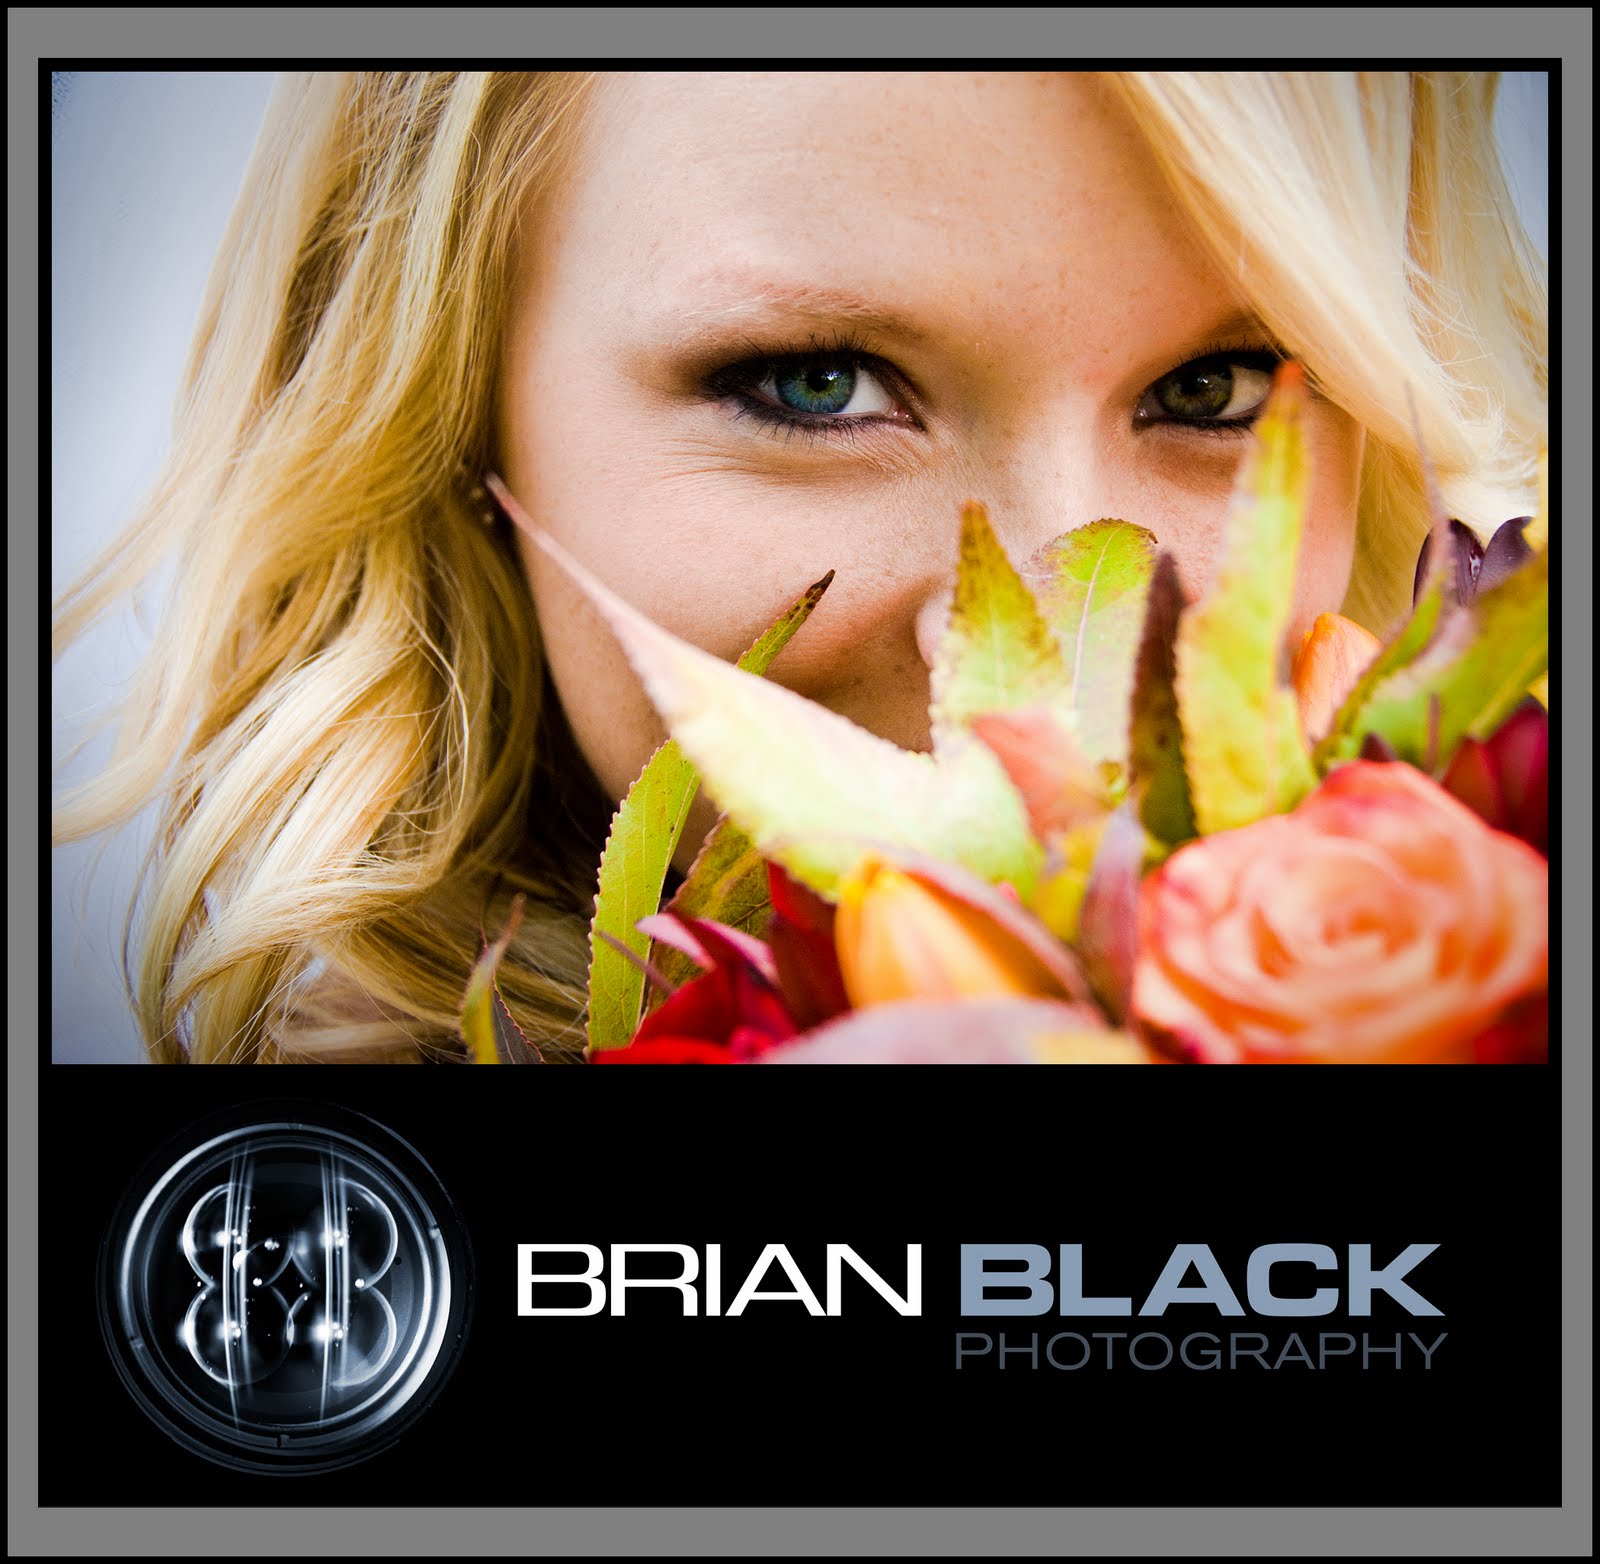 Brian Black Photography